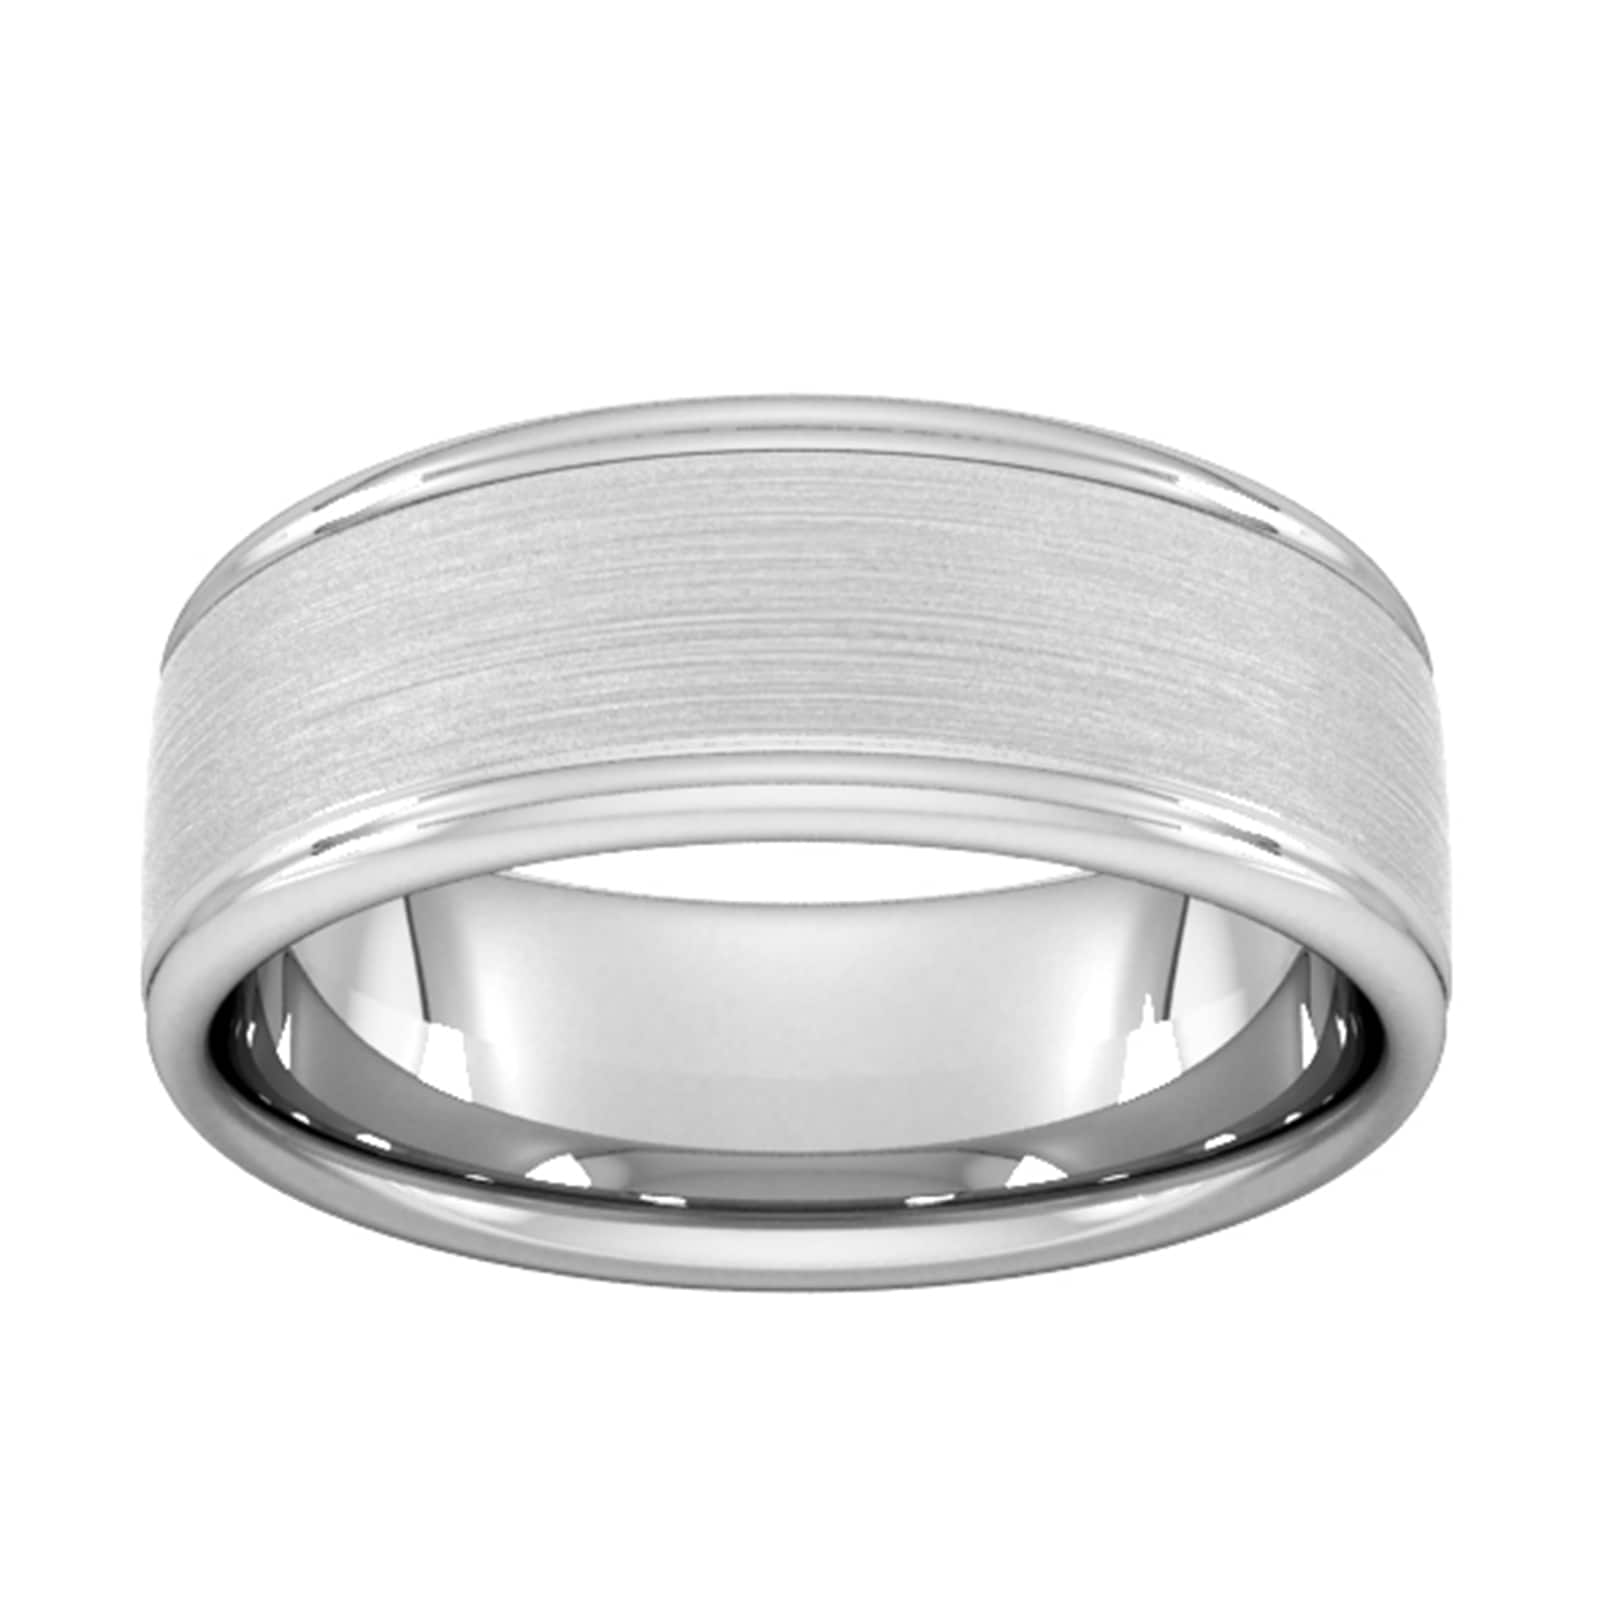 8mm Slight Court Standard Matt Centre With Grooves Wedding Ring In 9 Carat White Gold - Ring Size G